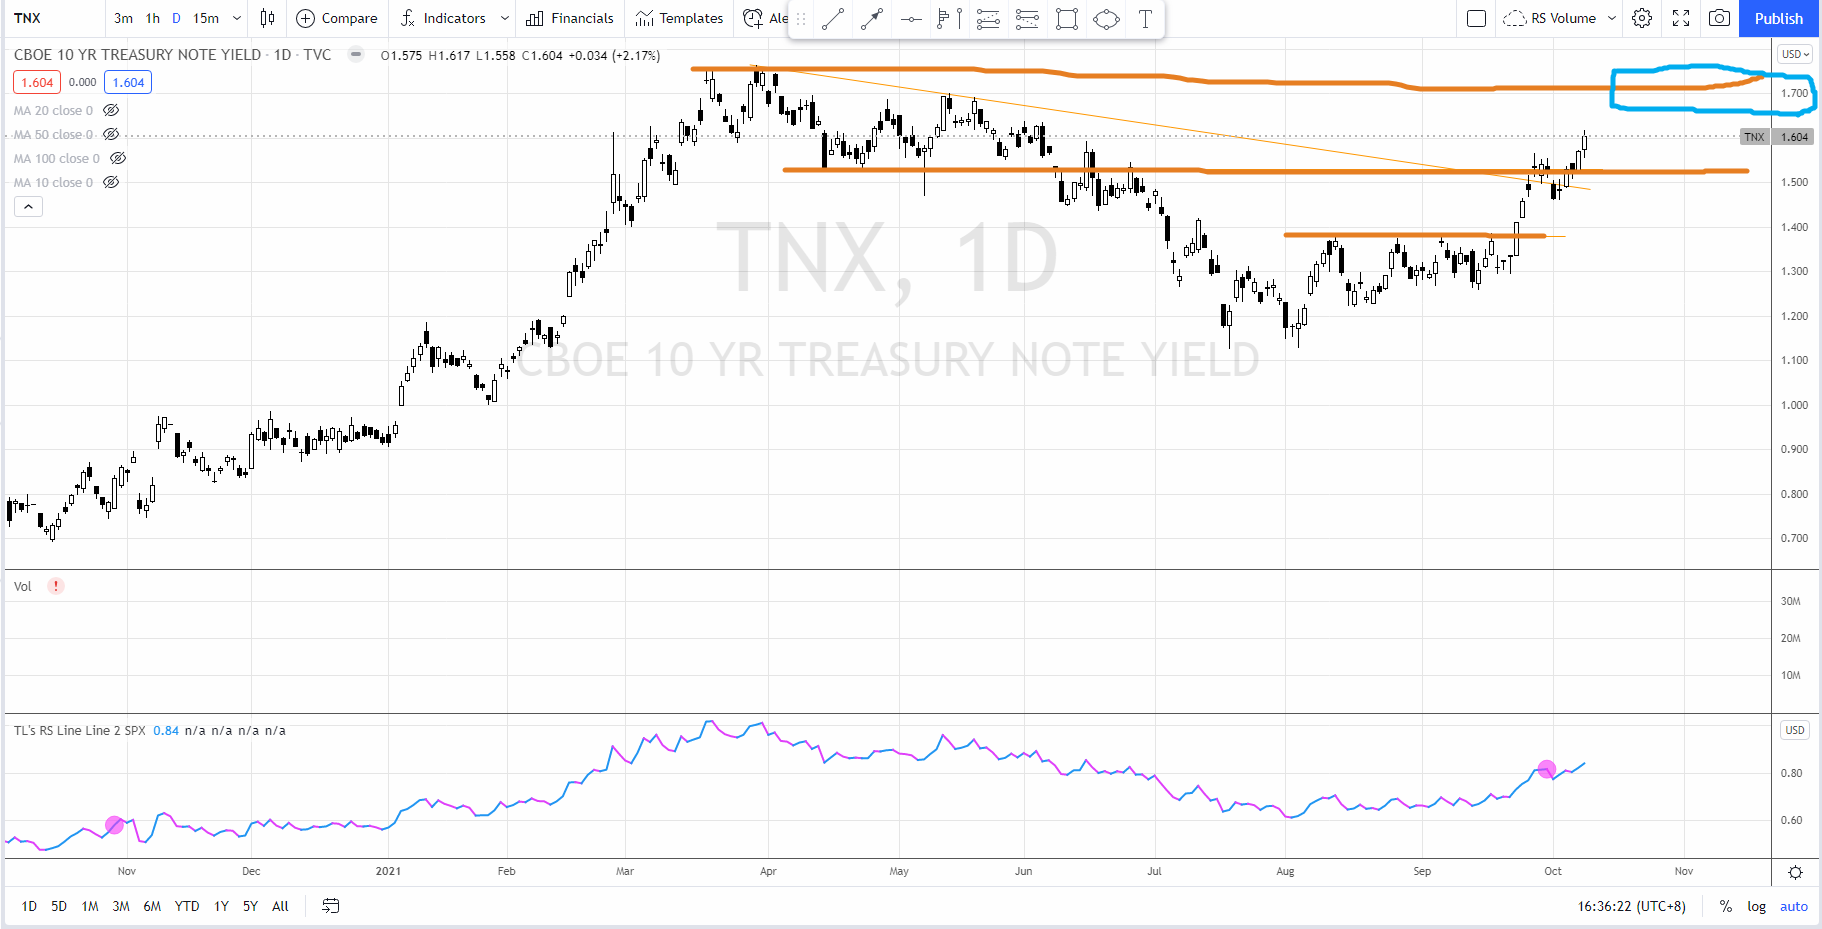 US 10 year treasury yield (TNX)